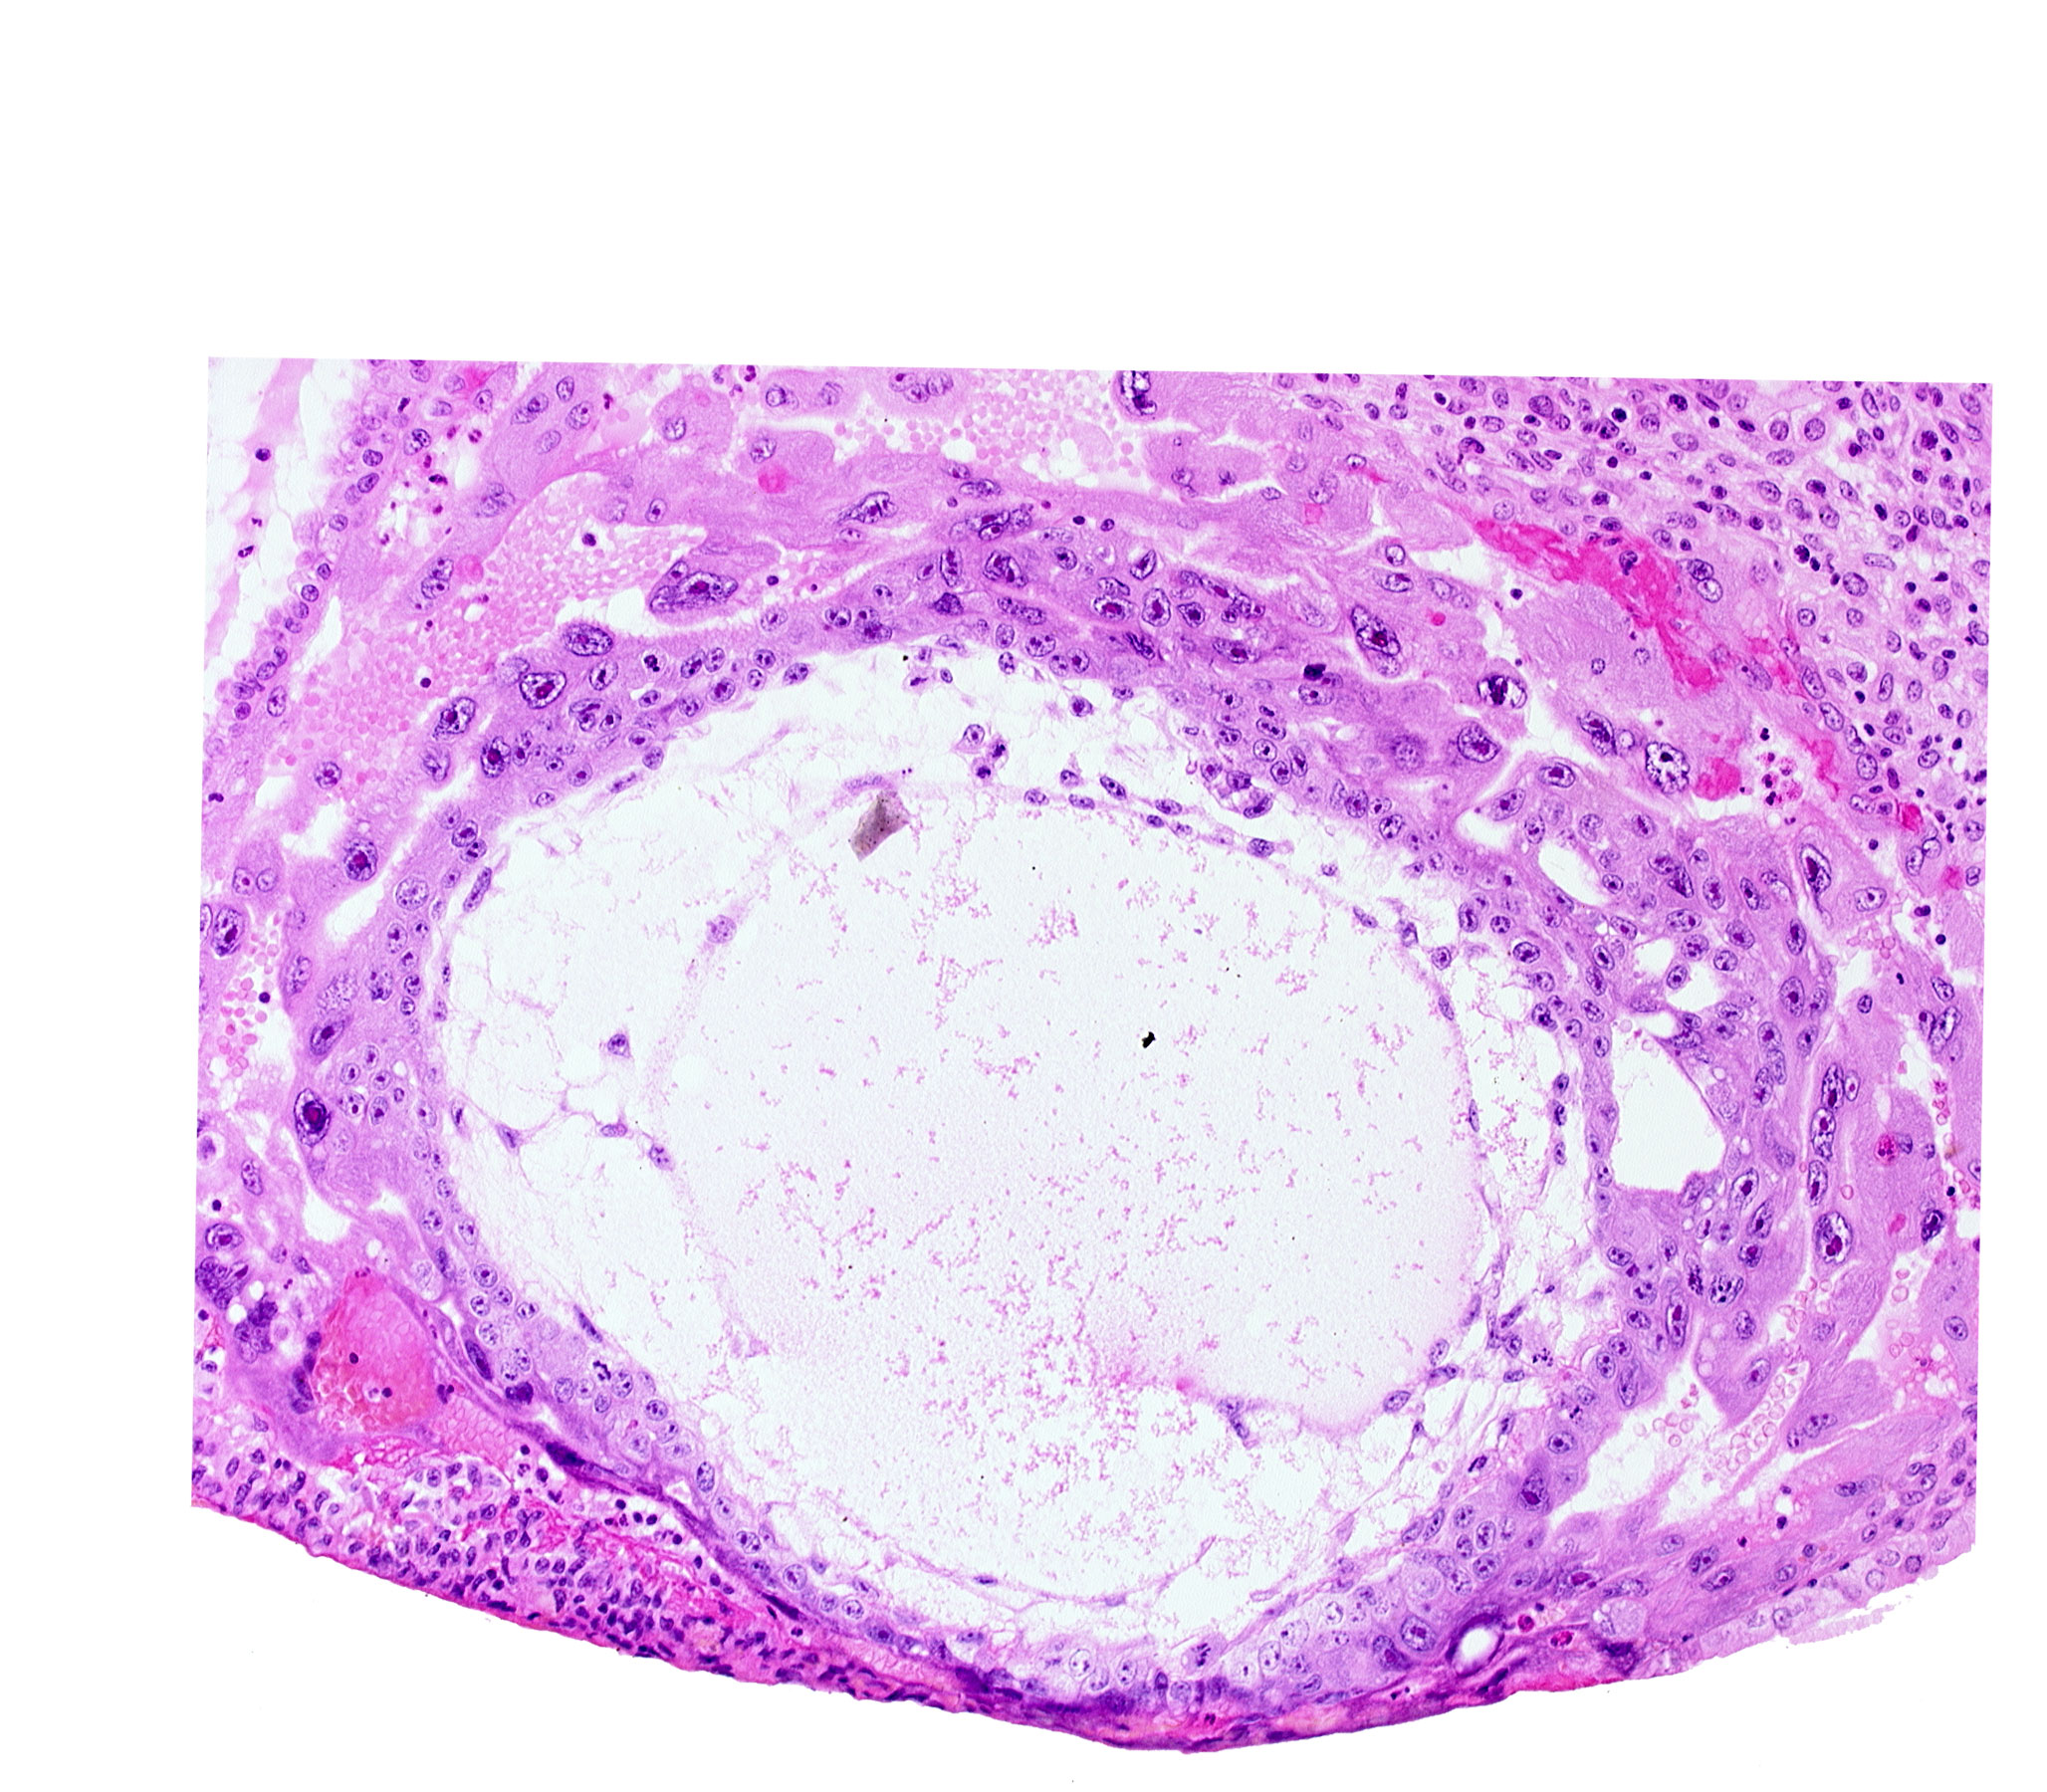 chorionic cavity, cytotrophoblast, extra-embryonic mesoblast, fibrous coagulum, primary umbilical vesicle cavity, syncytiotrophoblast, uterine cavity